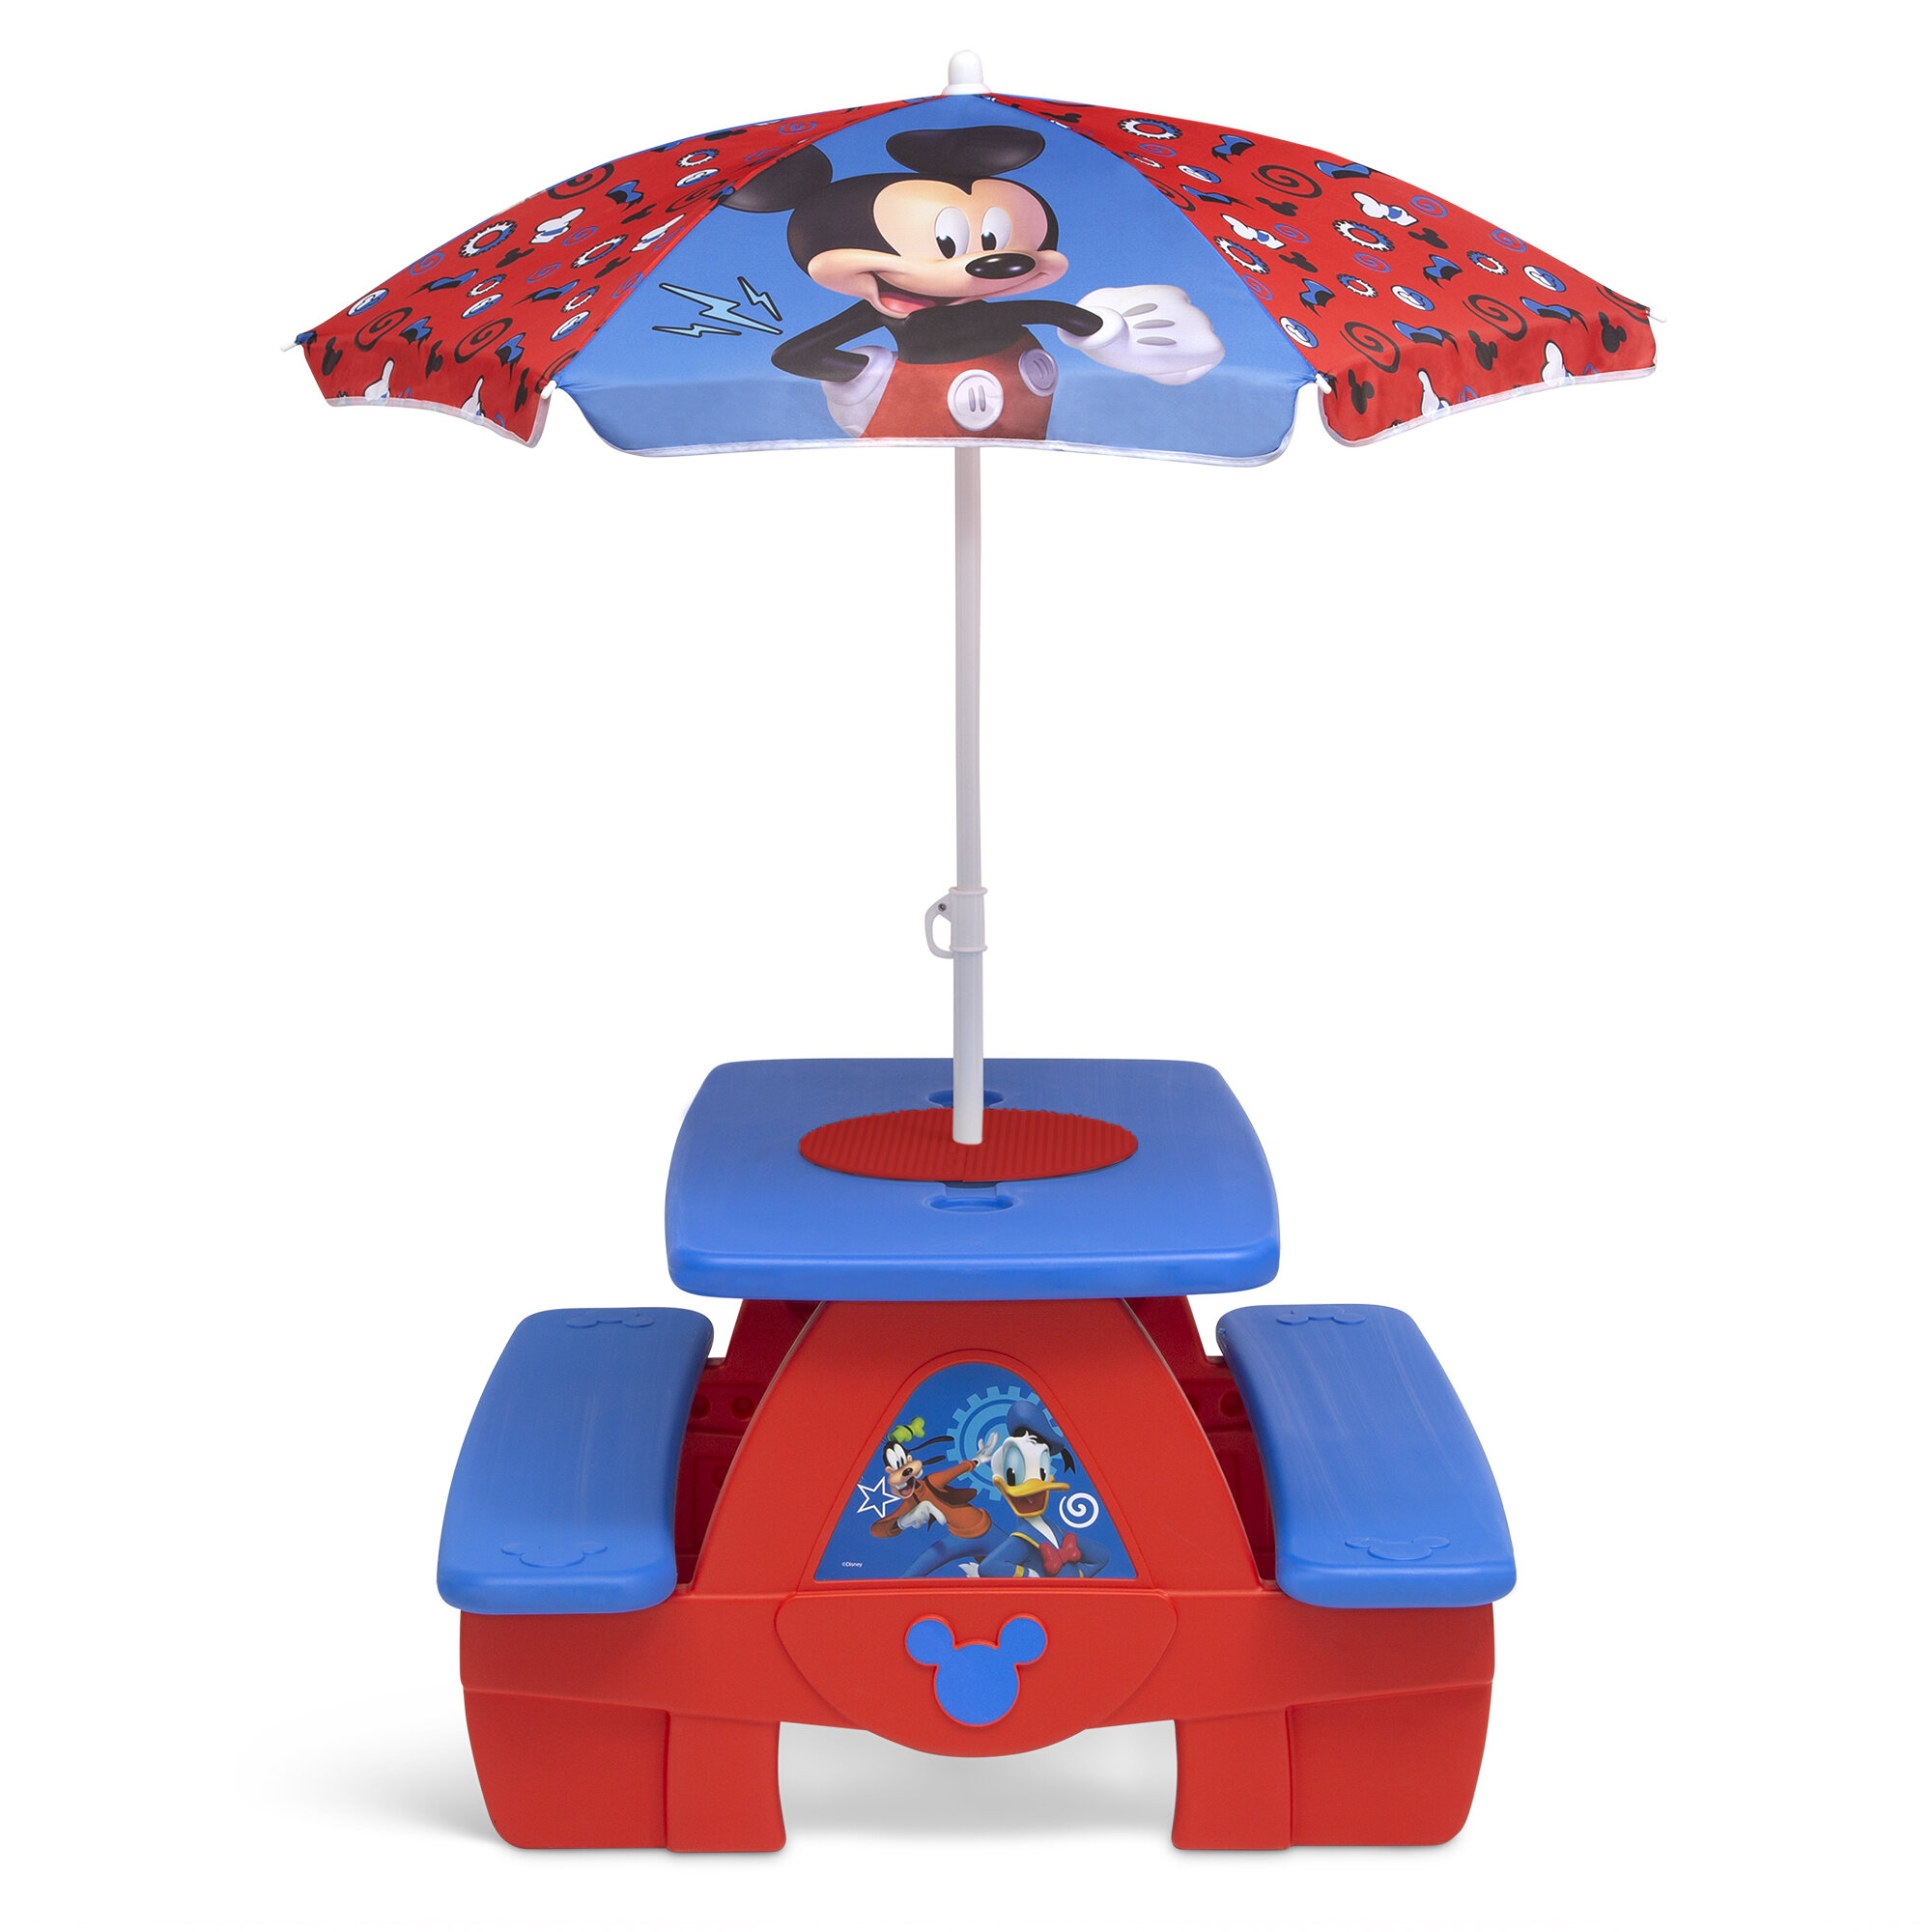 Mickey Mouse Plastic Basketball Set - Delta Children